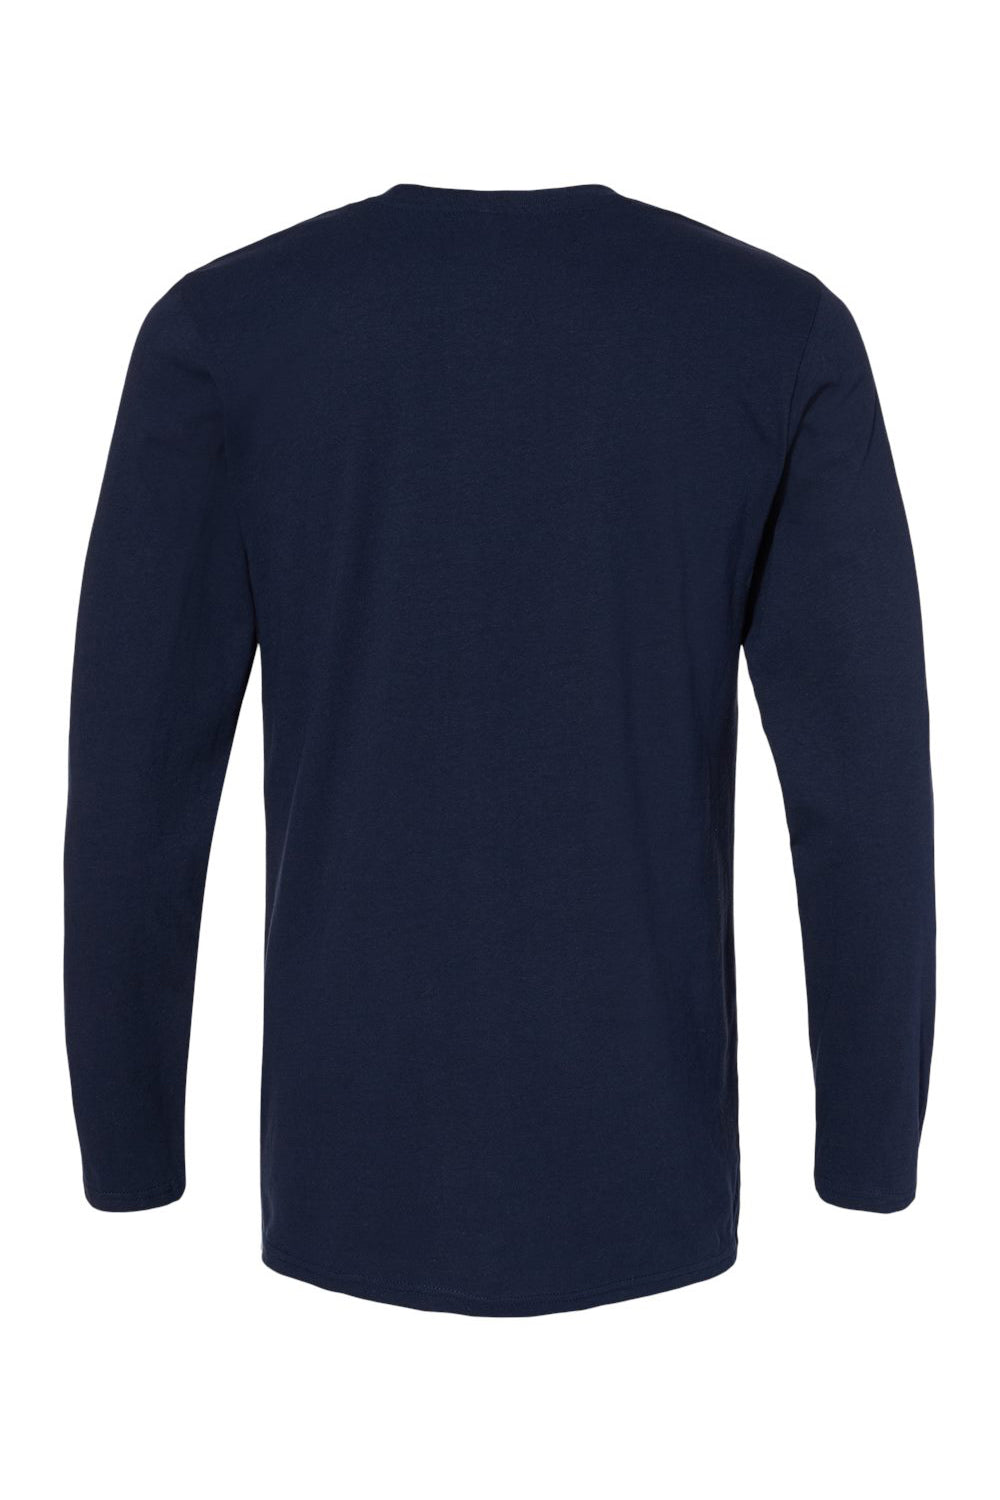 LAT 6918 Mens Fine Jersey Long Sleeve Crewneck T-Shirt Navy Blue Flat Back